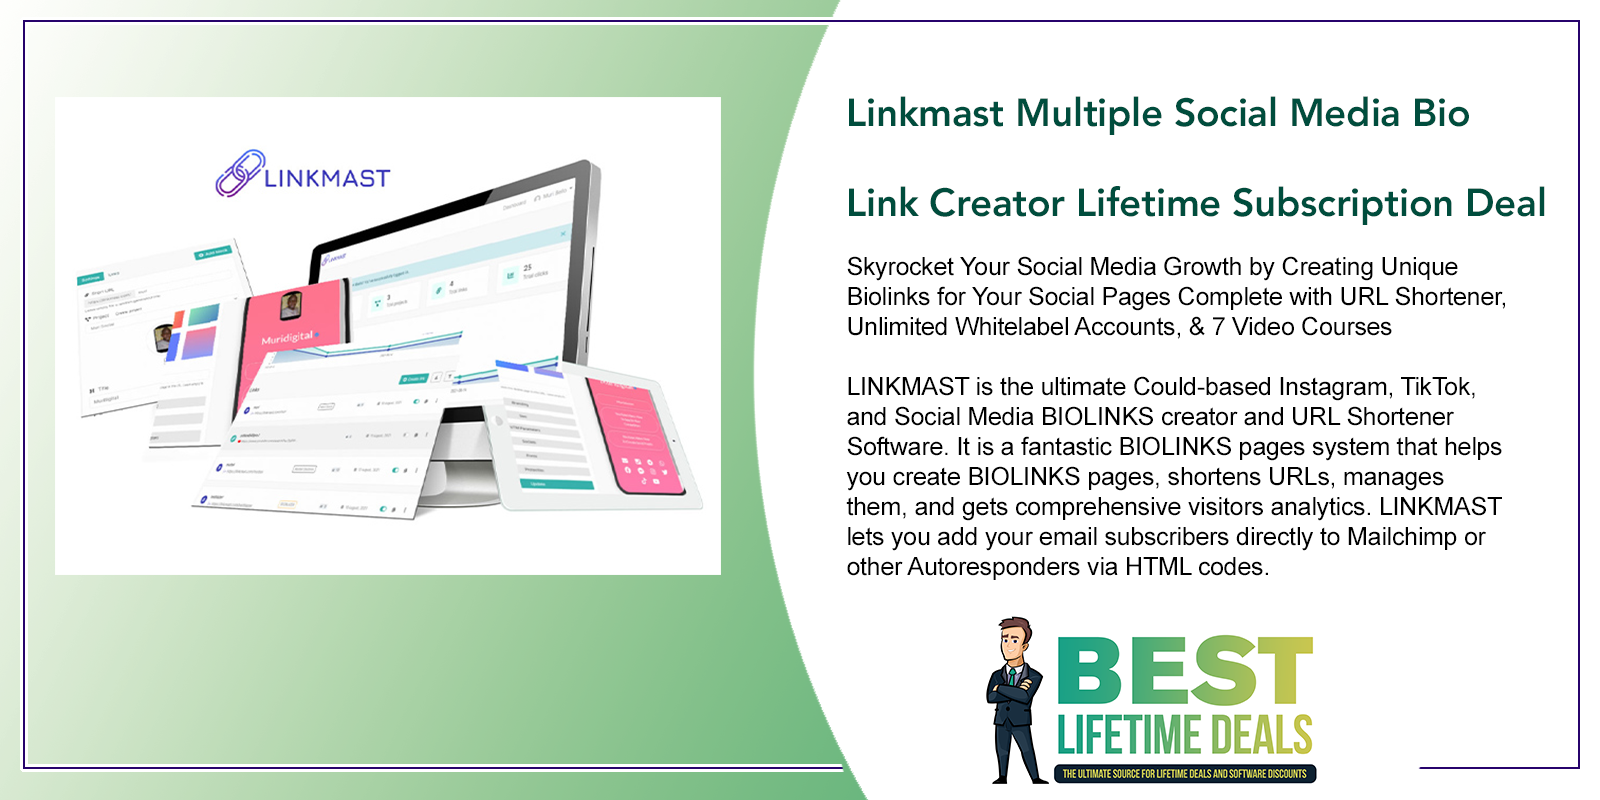 Linkmast Multiple Social Media Bio Link Creator Lifetime Subscription Deal Featured Image